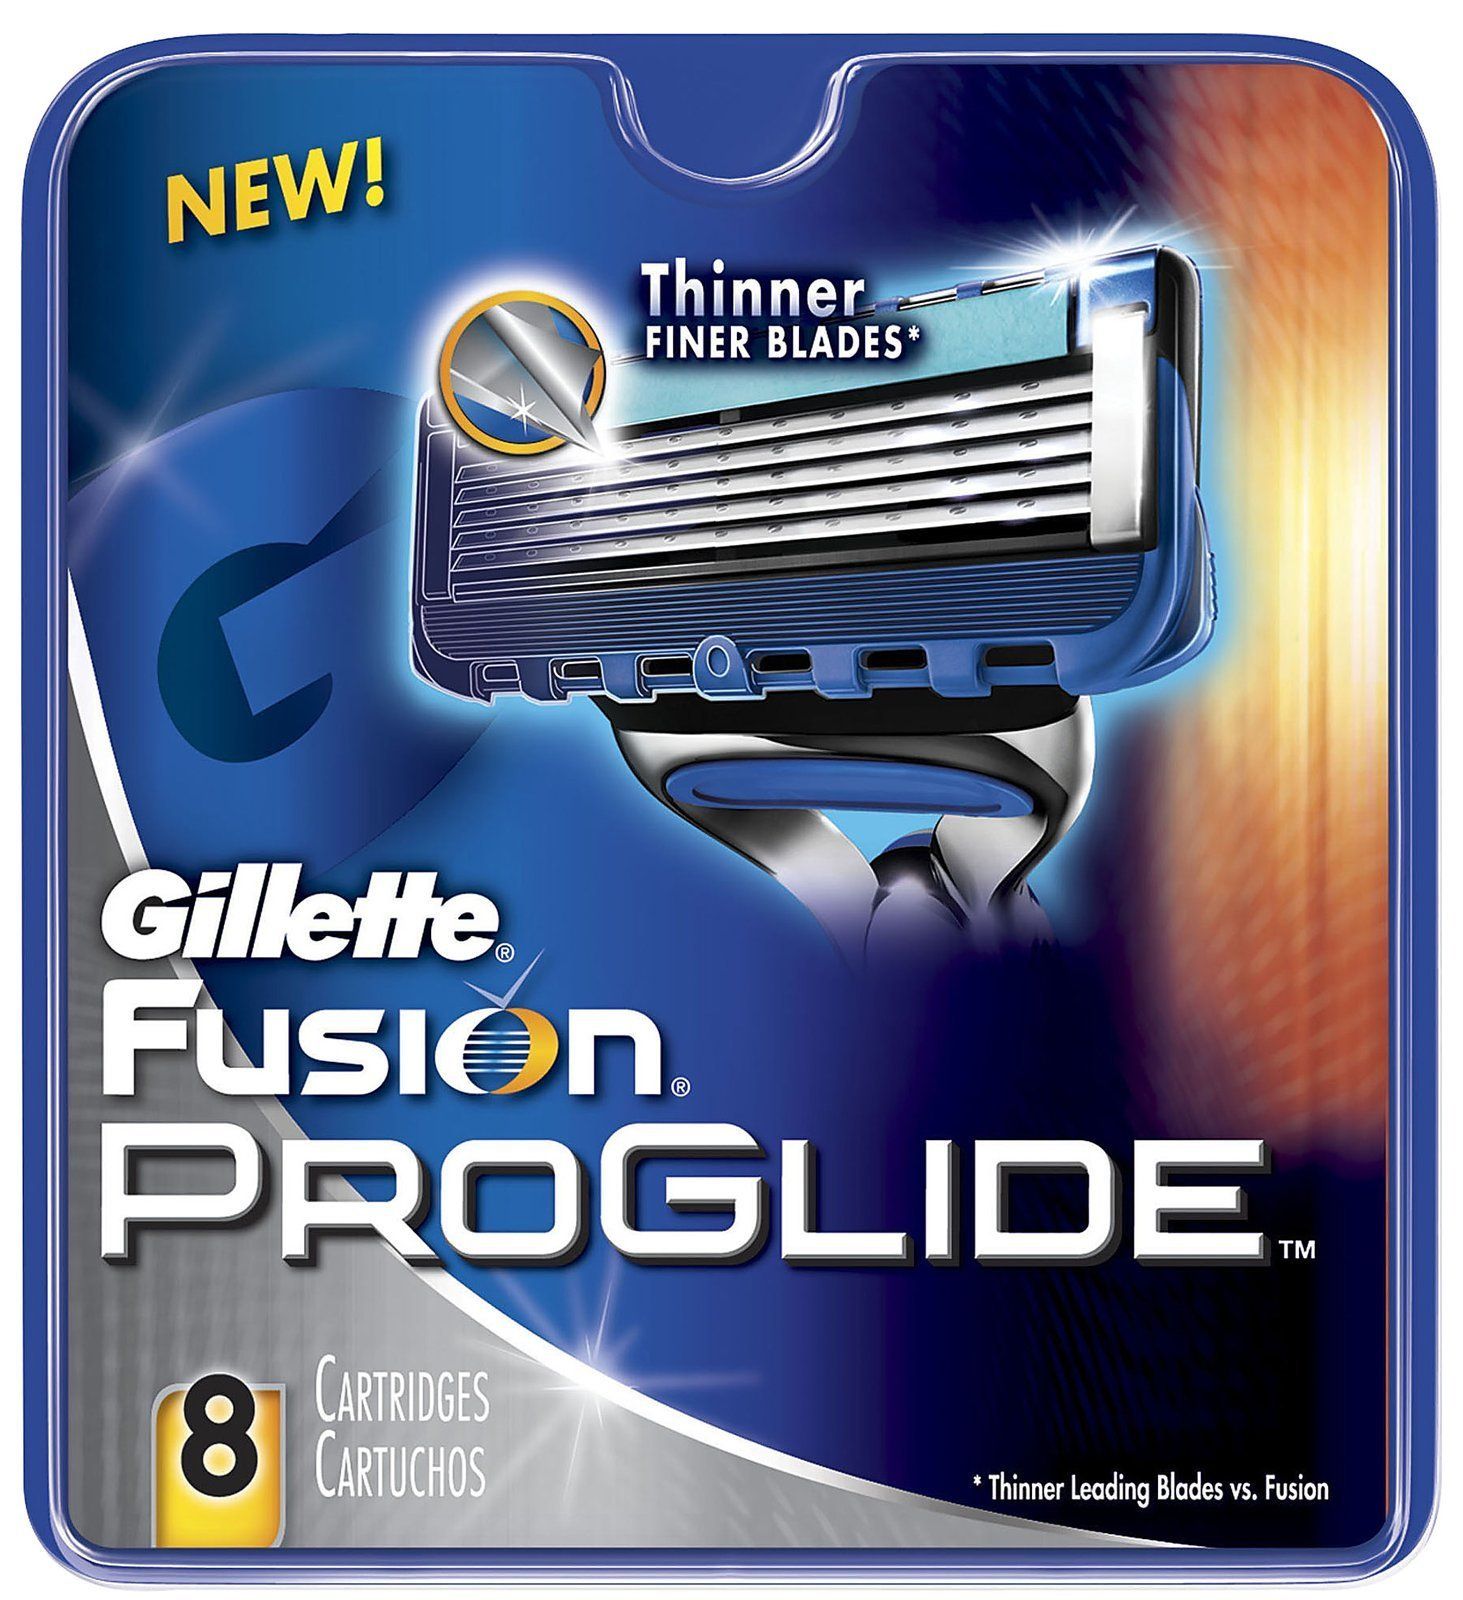 Fusion5 proglide кассеты